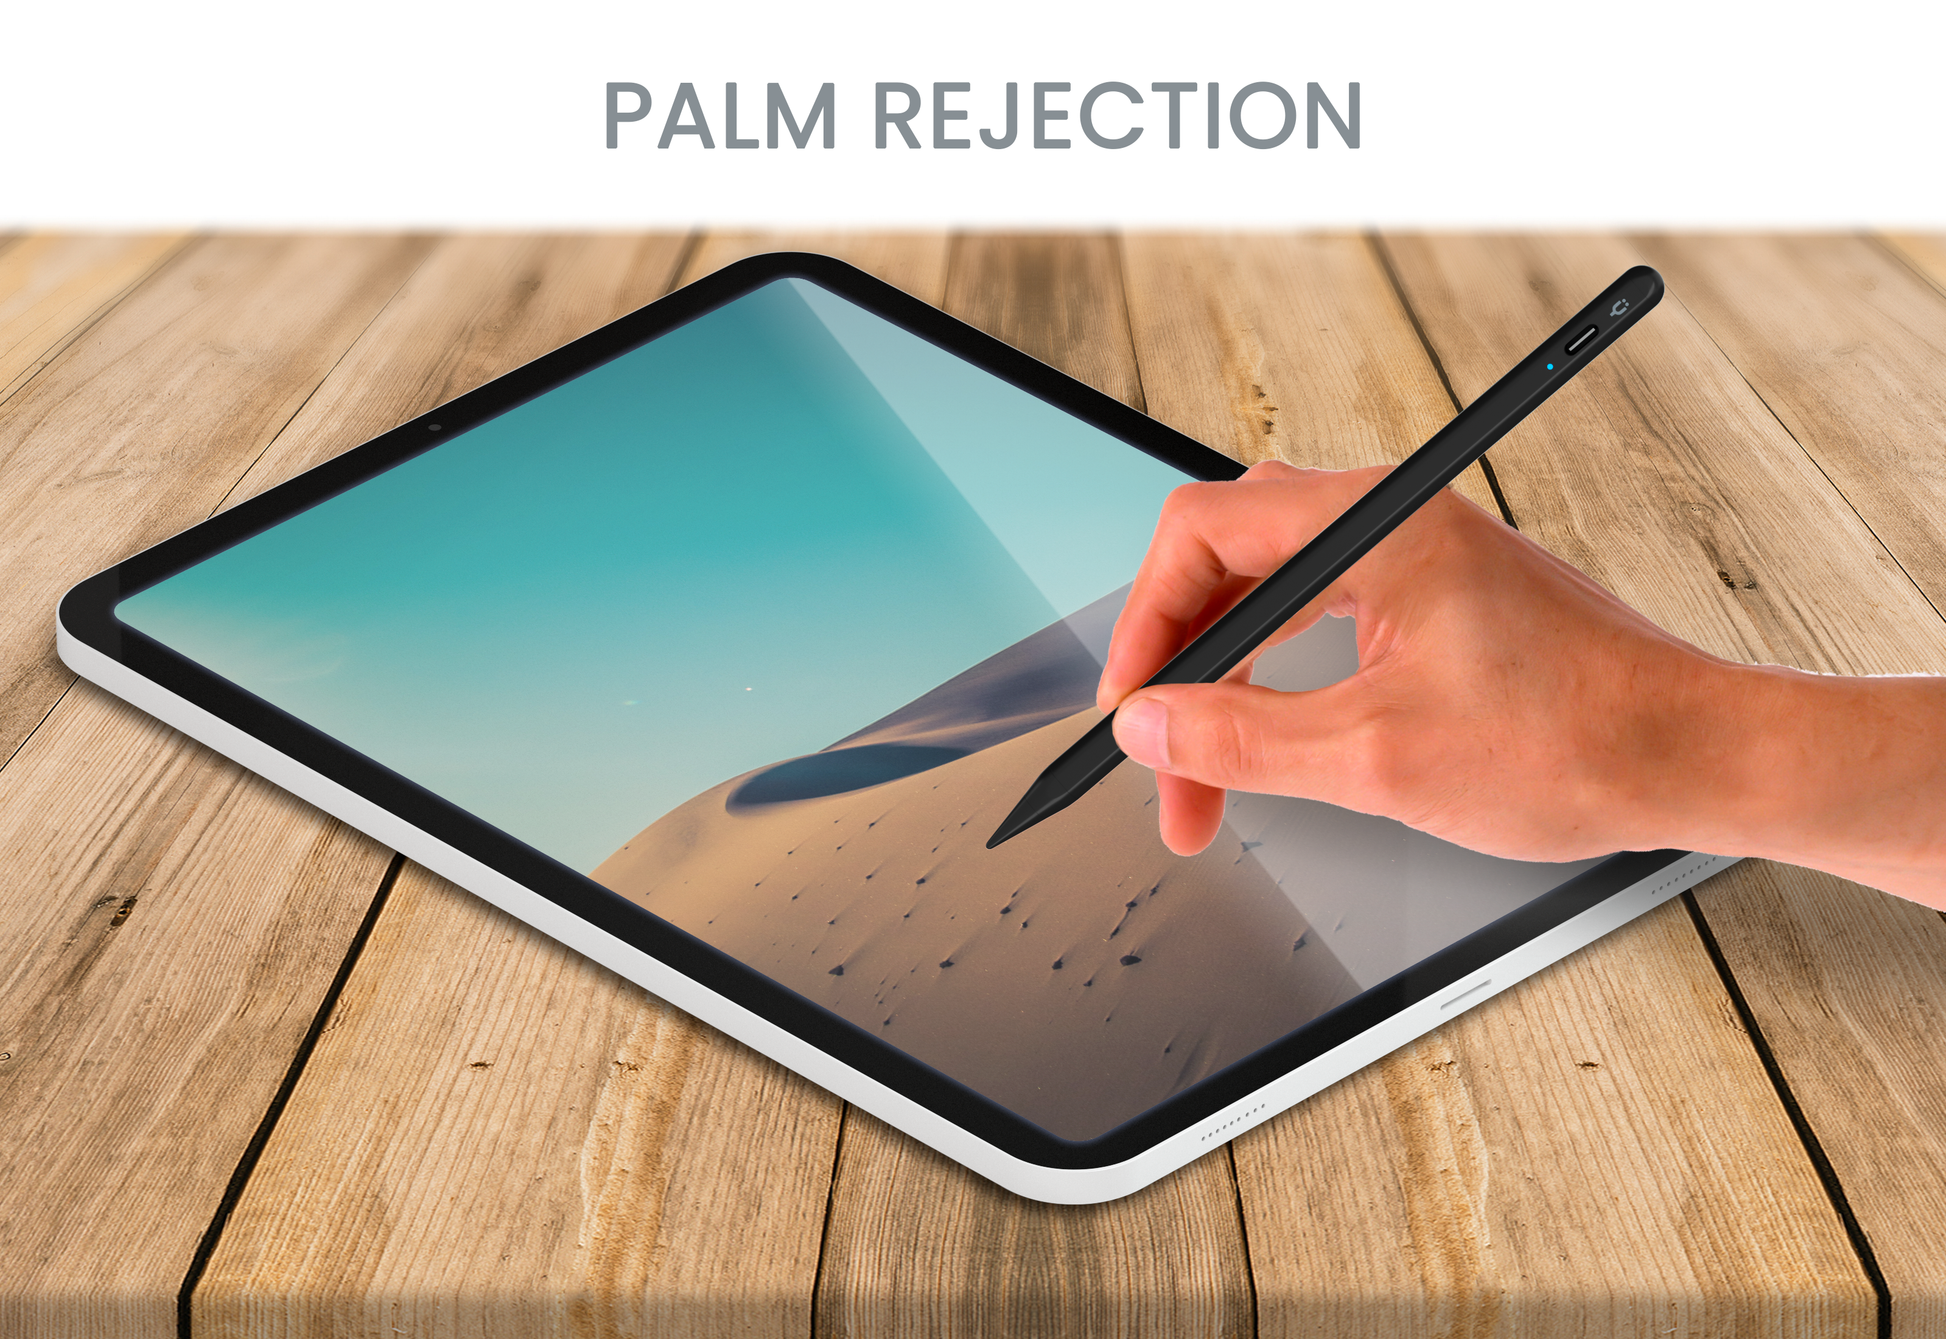 CASE U Stylus Pen with Palm Rejection Technology